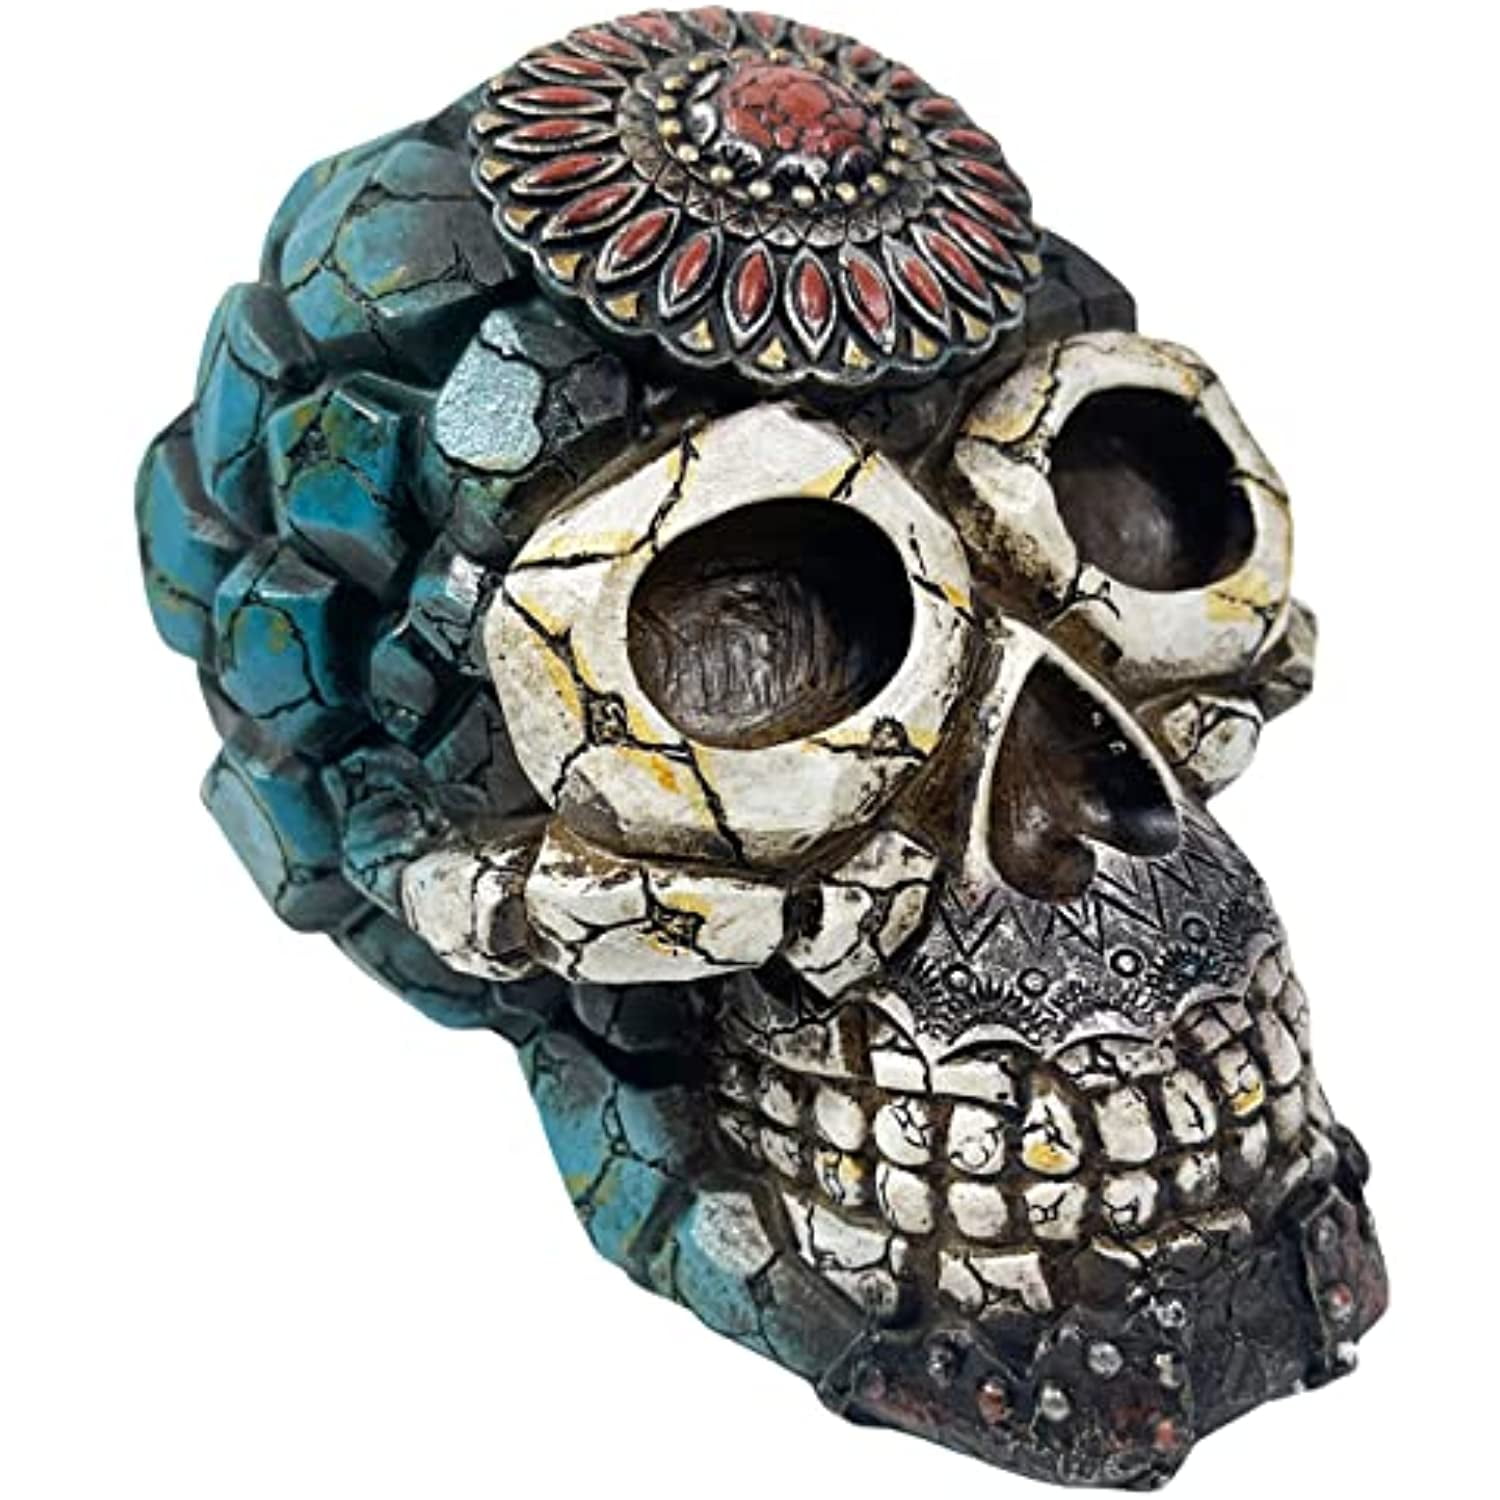 Industrial Bronze Resin Gothic Steampunk Nemesis Skull Sculpture Ornament Gift 